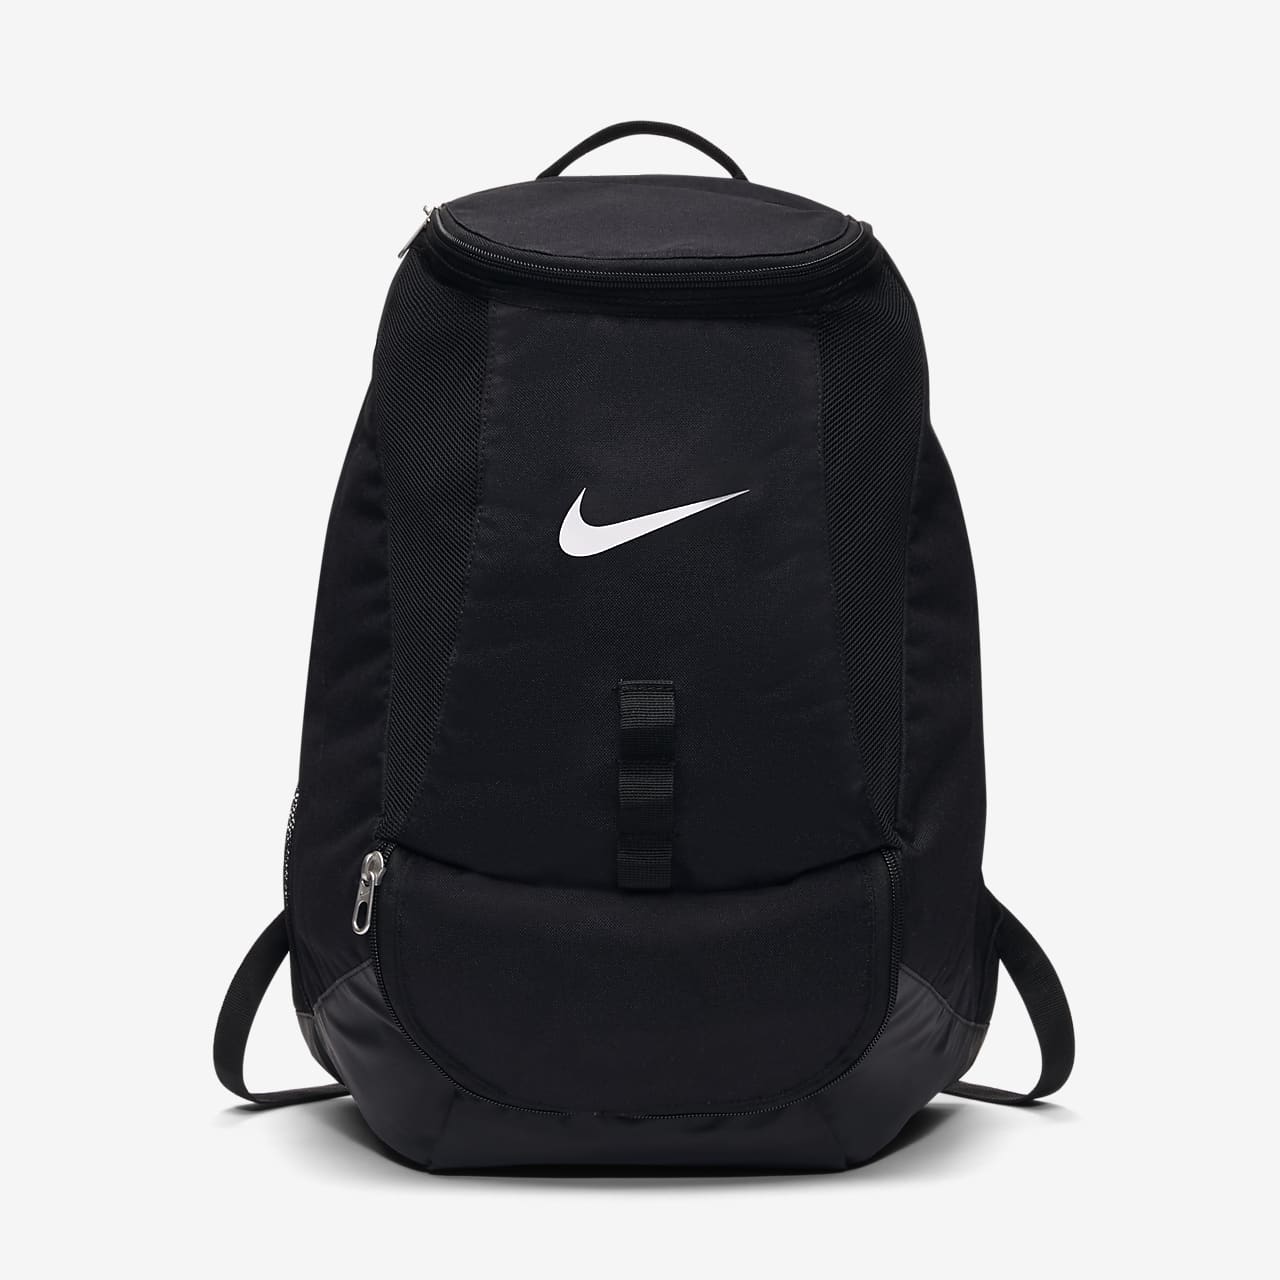 nike soccer backpack with ball holder